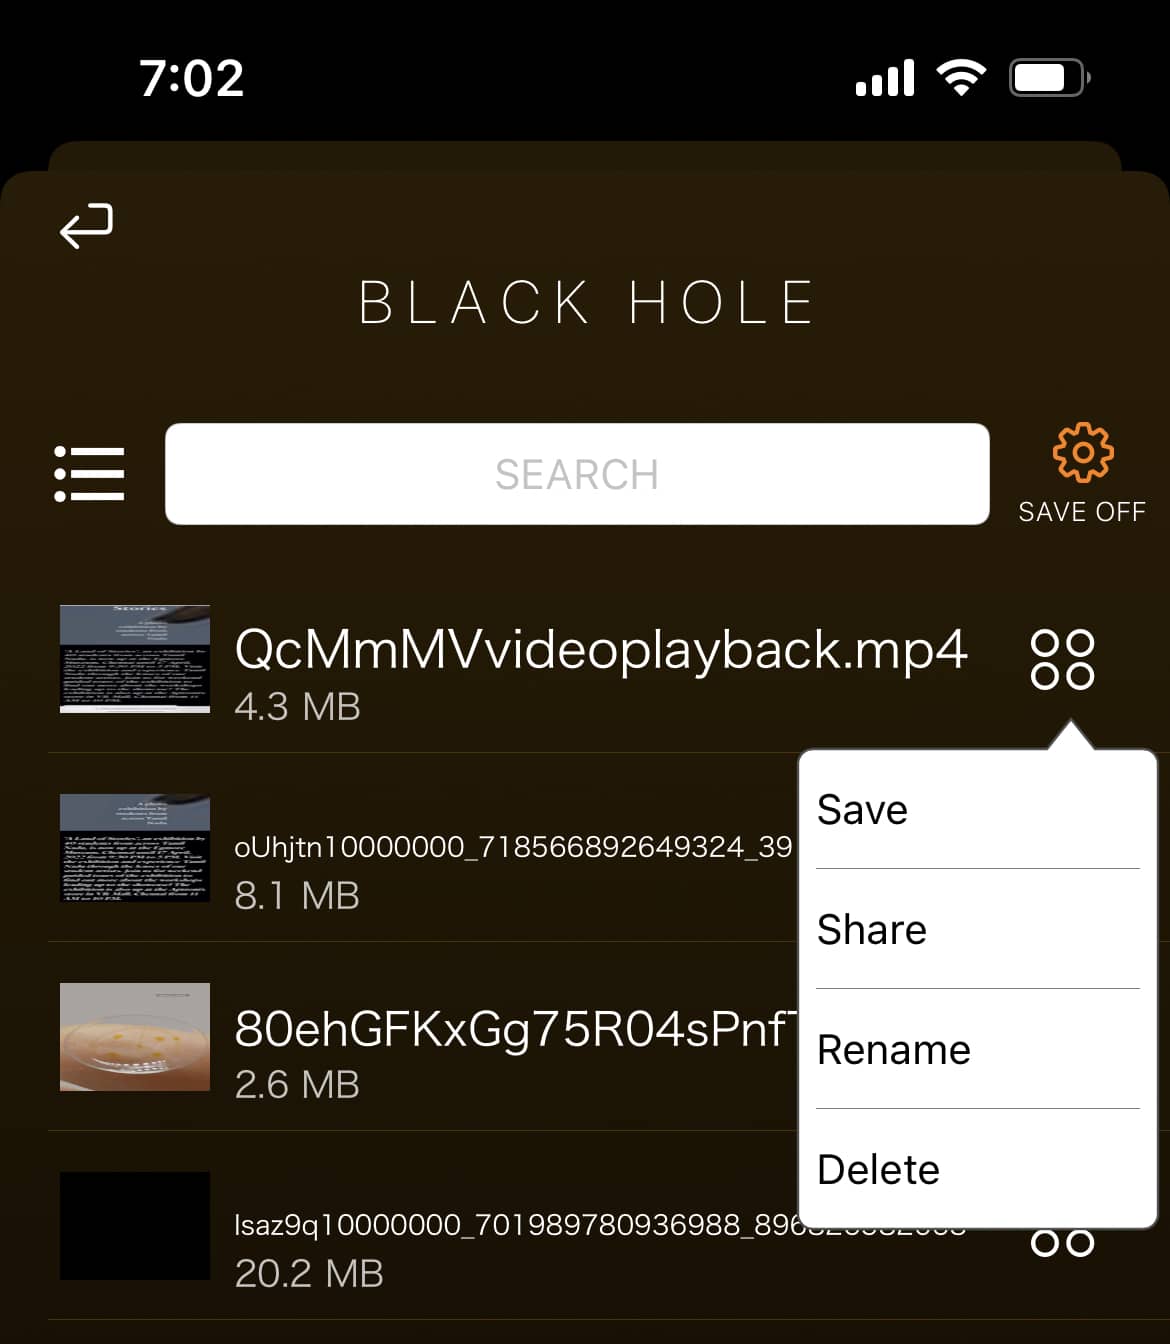 blackhole app iphone ipad download videos